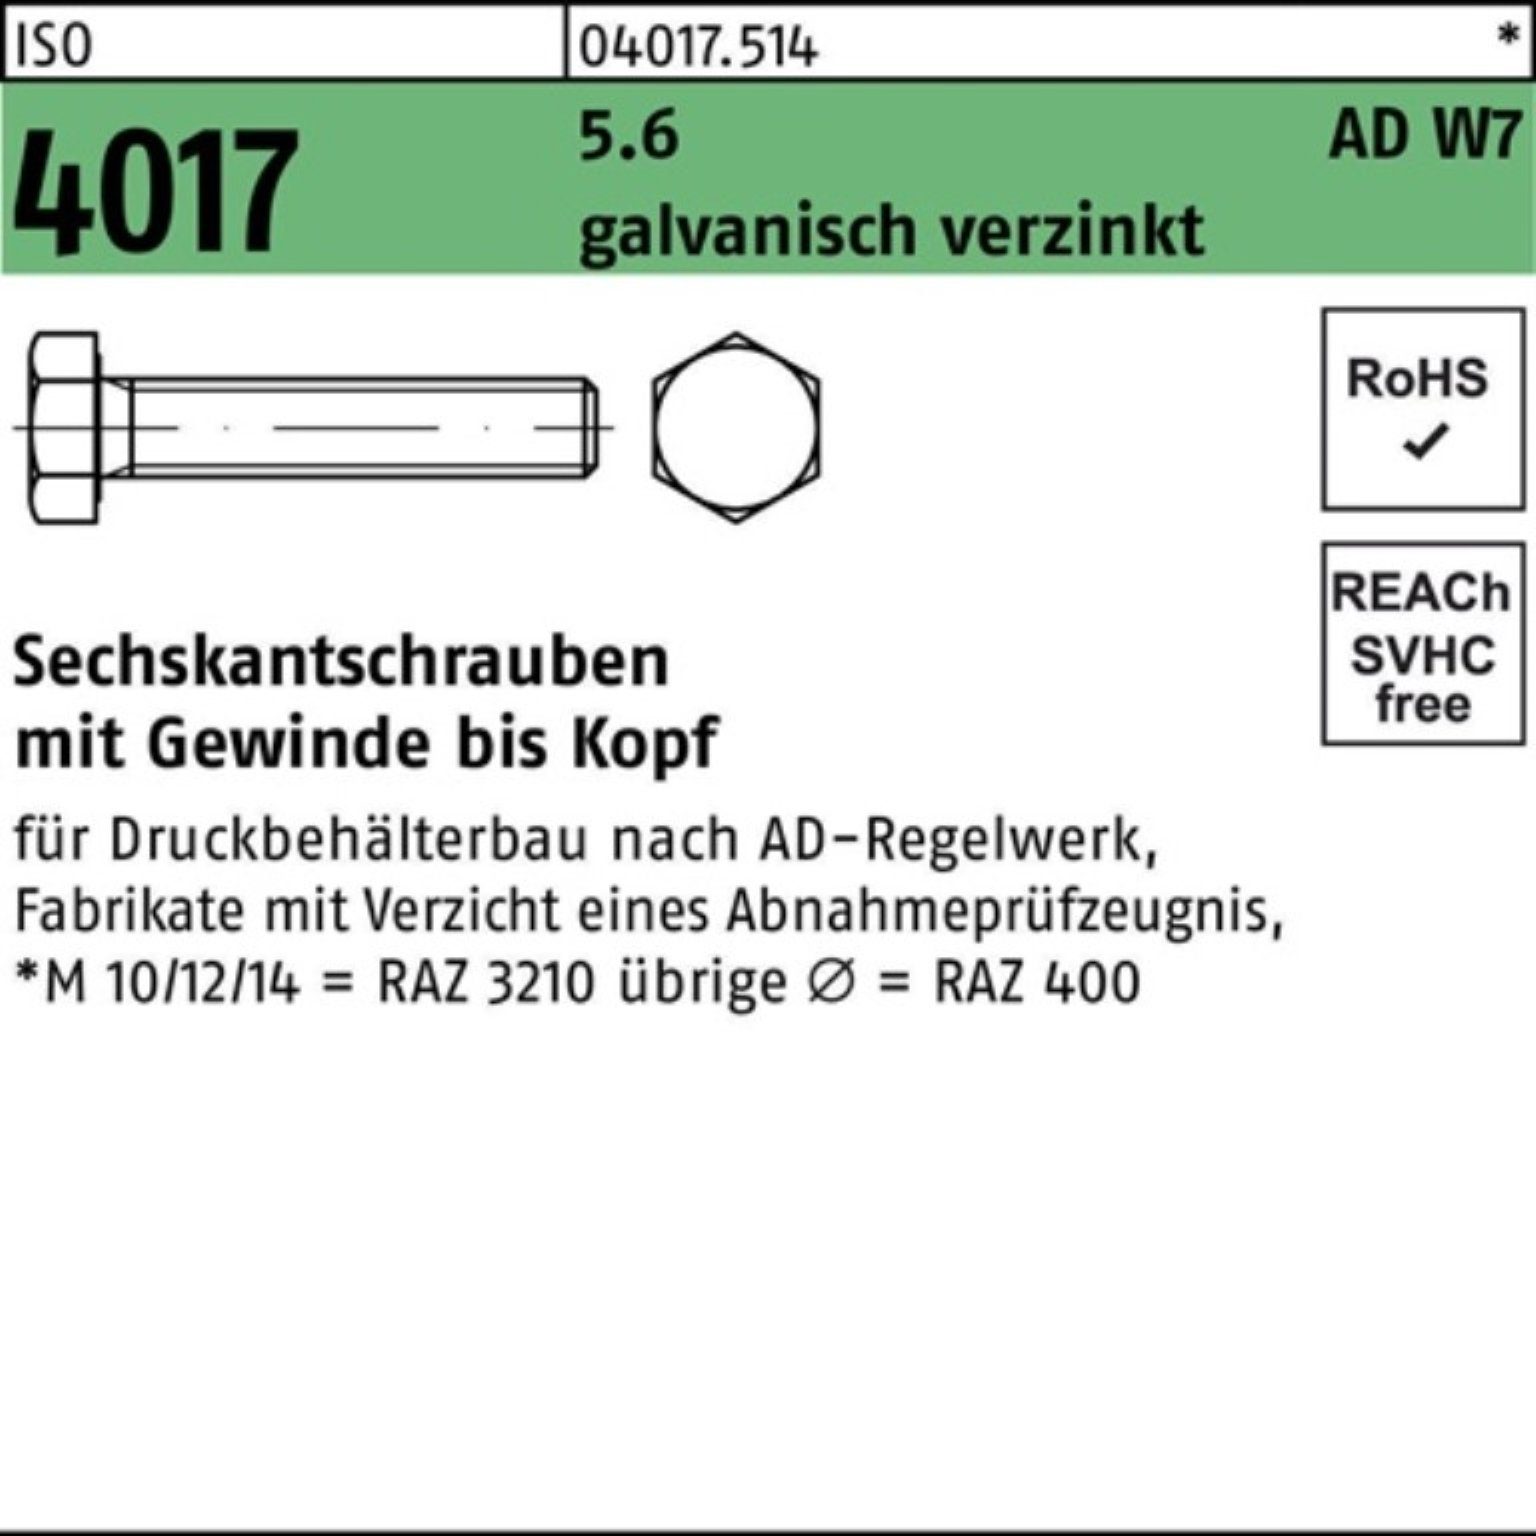 Bufab Sechskantschraube 100er Pack Sechskantschraube galv.verz. 4017 M20x AD VG 5.6 W7 ISO 75